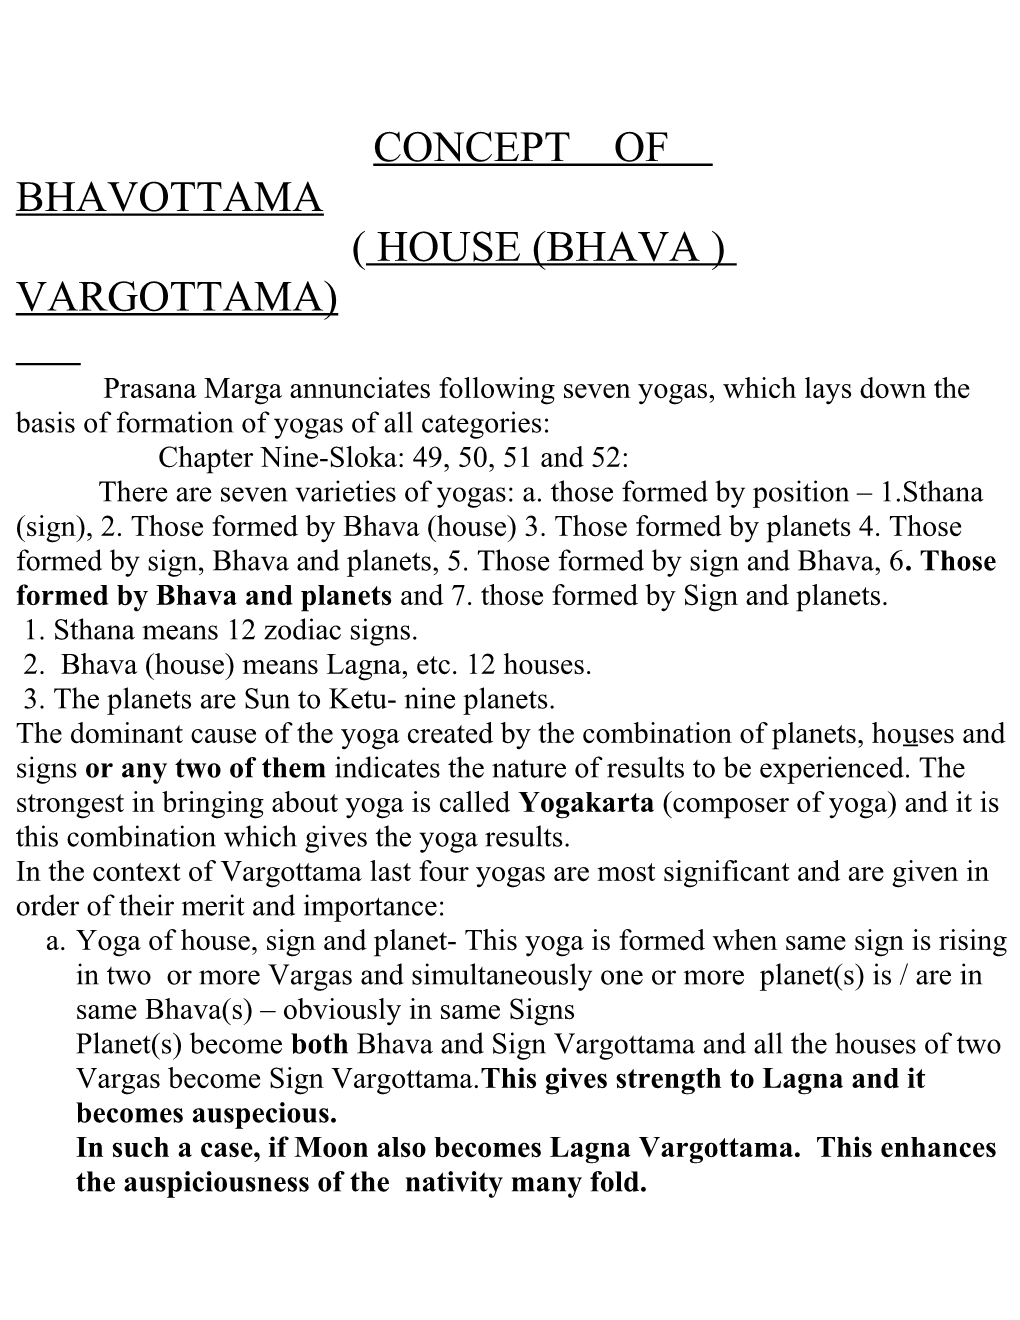 Concept of Bhavottama